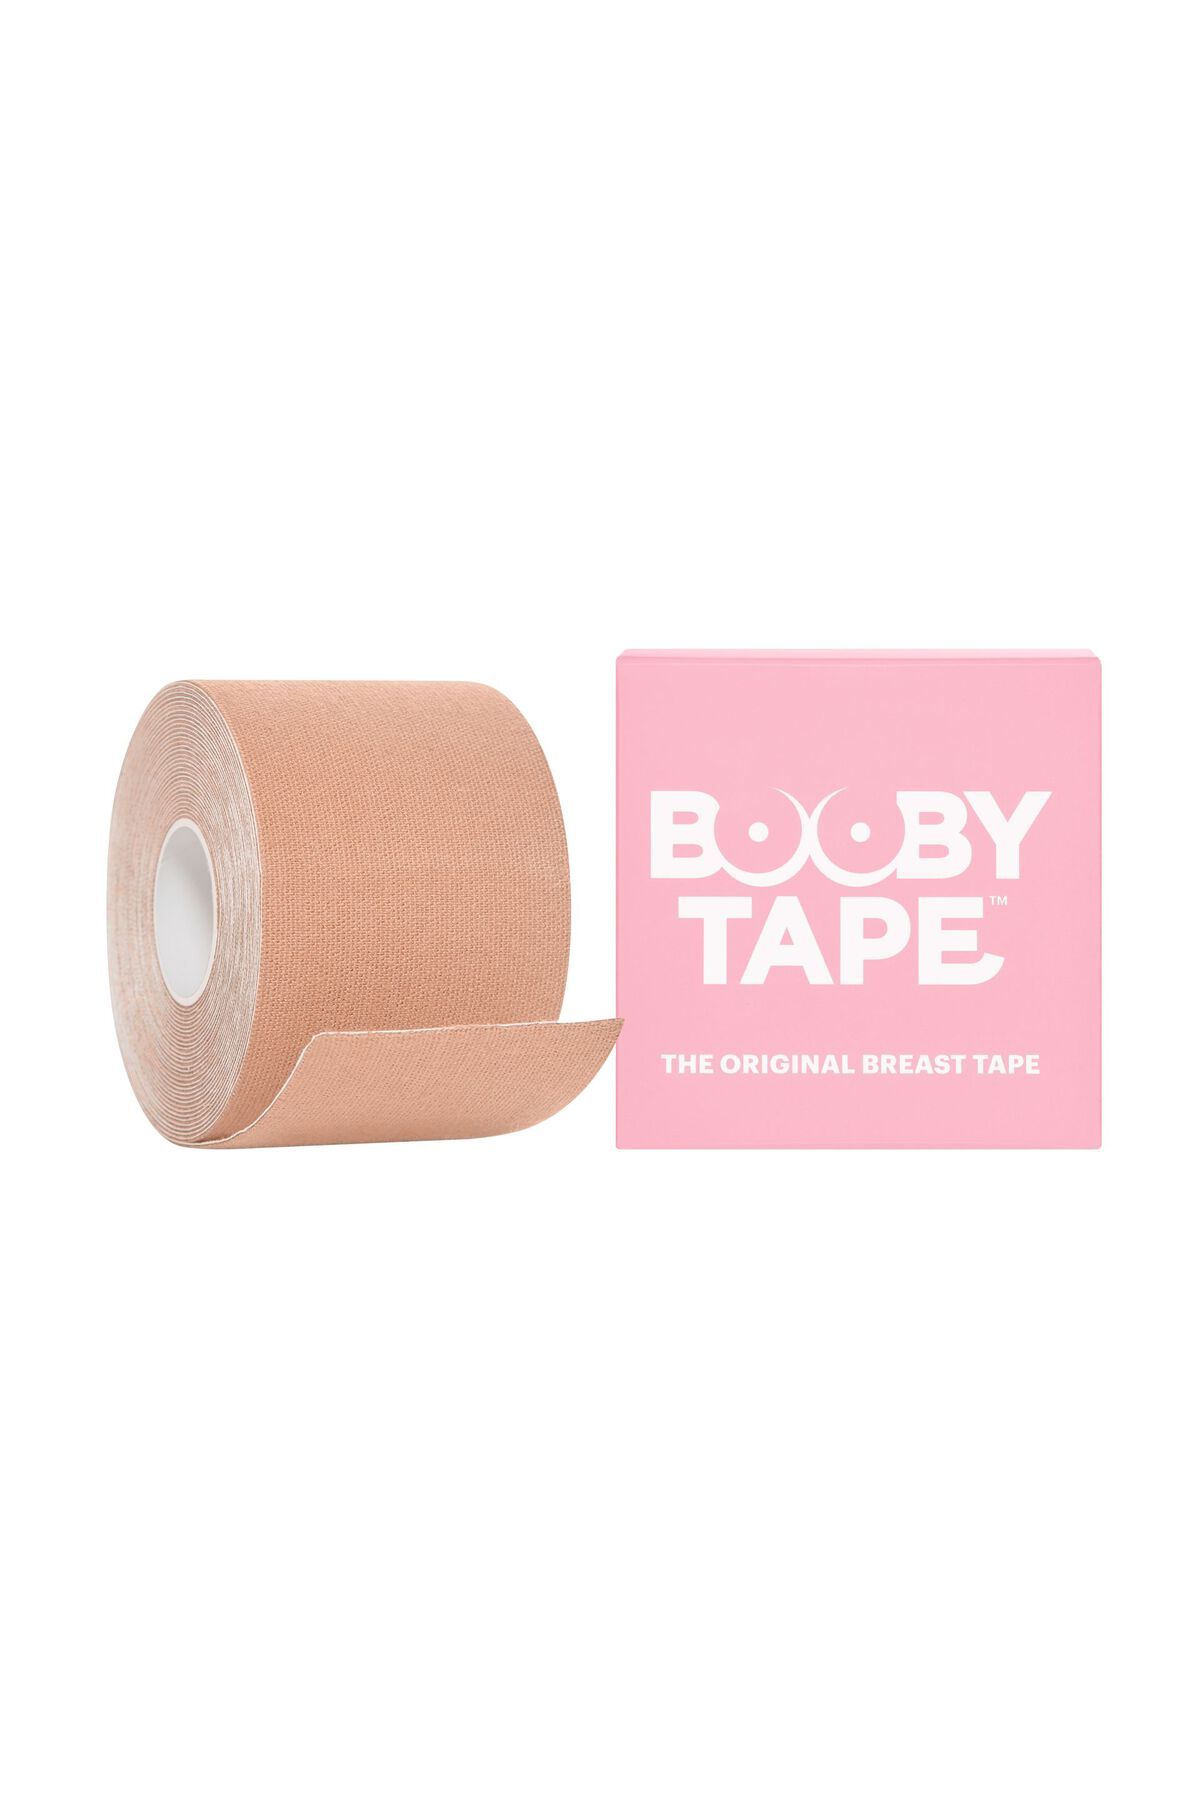 BOOBY TAPE, Breast Tape Brobei